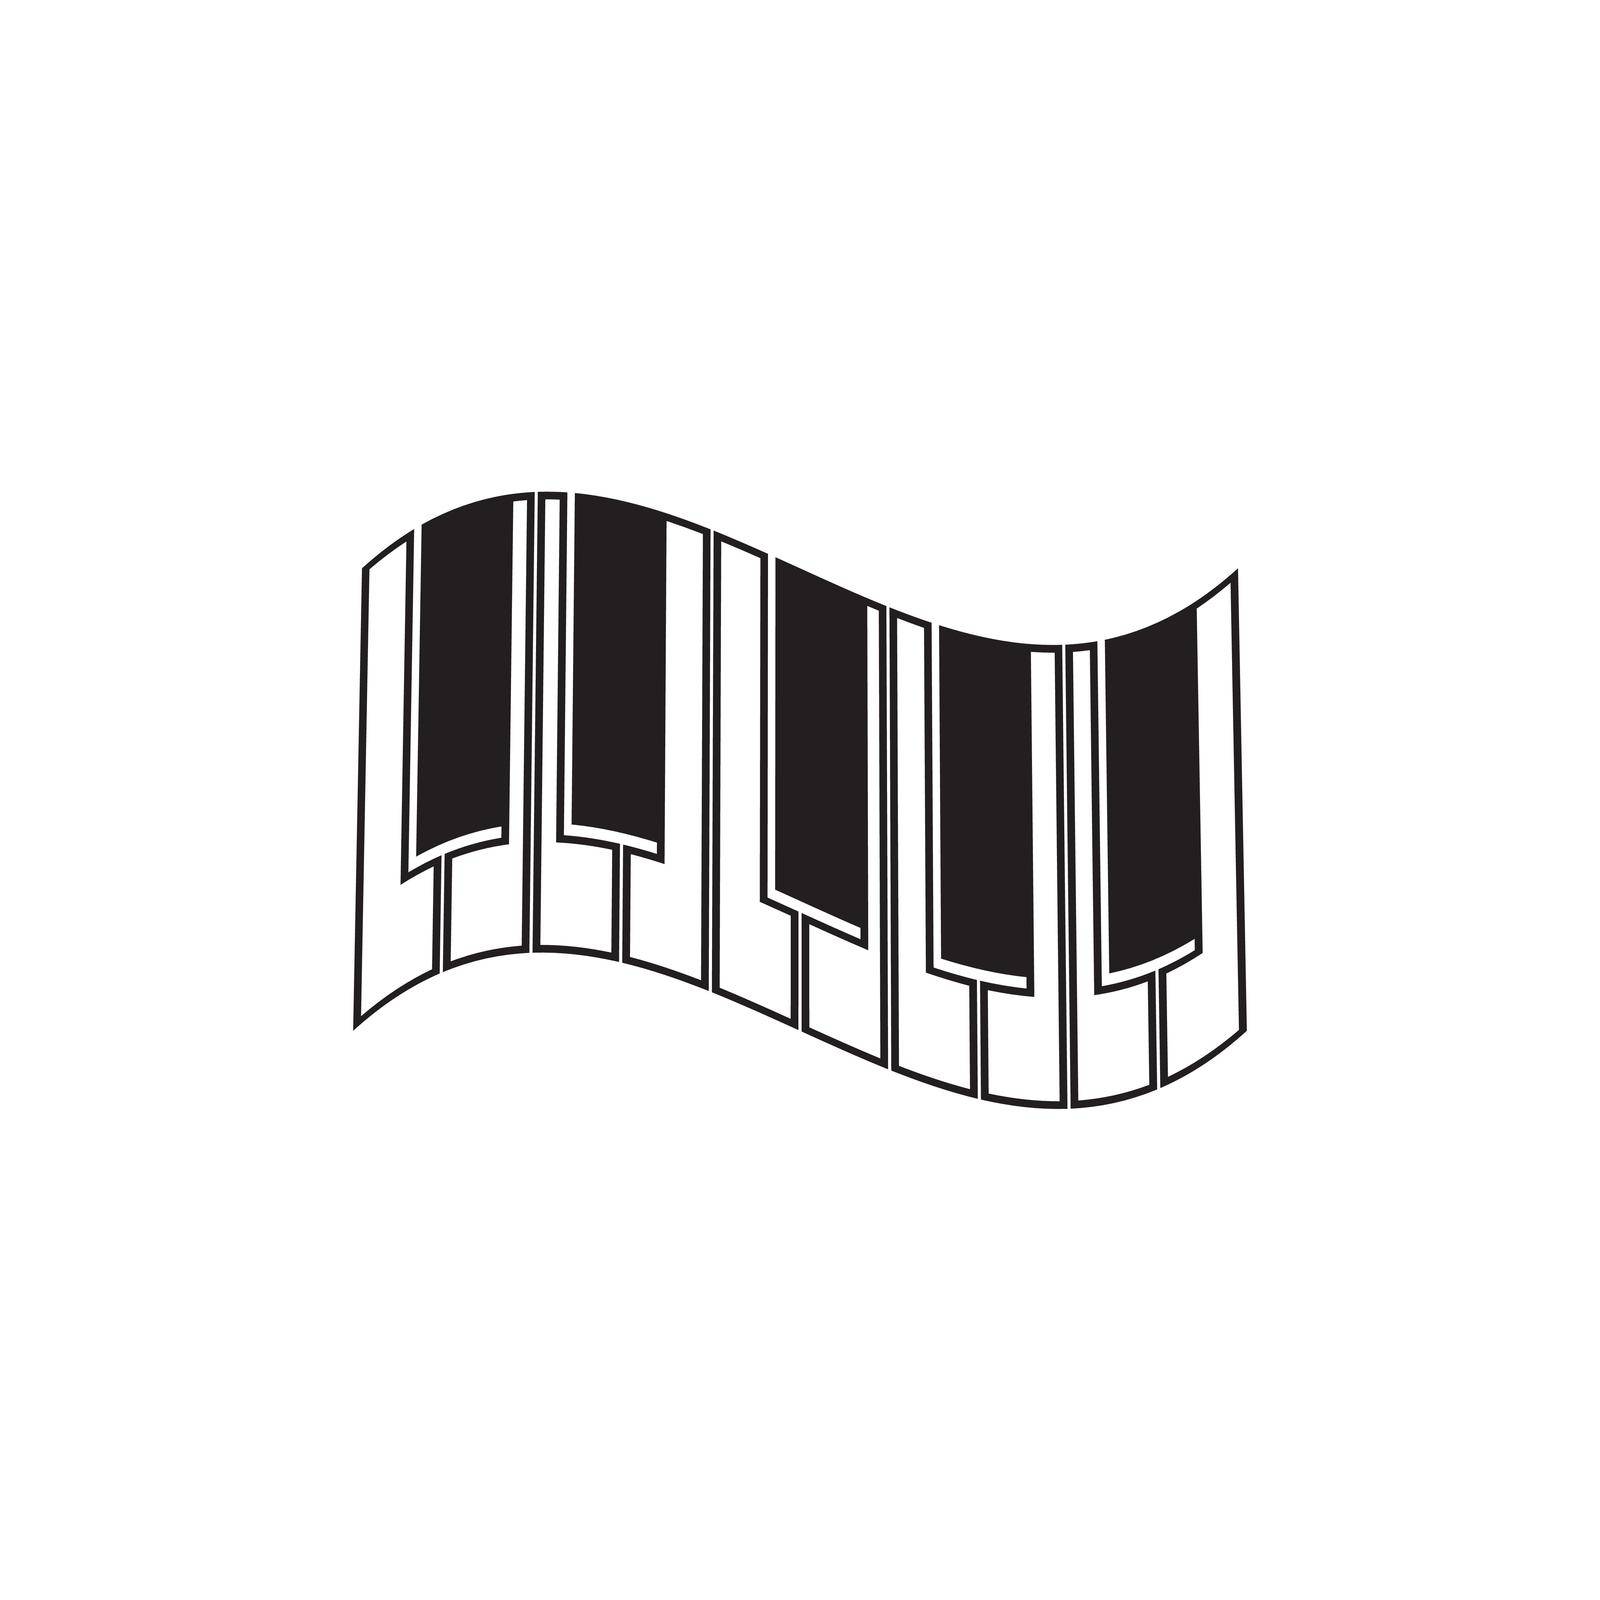 piano logo and symbol vectors by Graphicindo